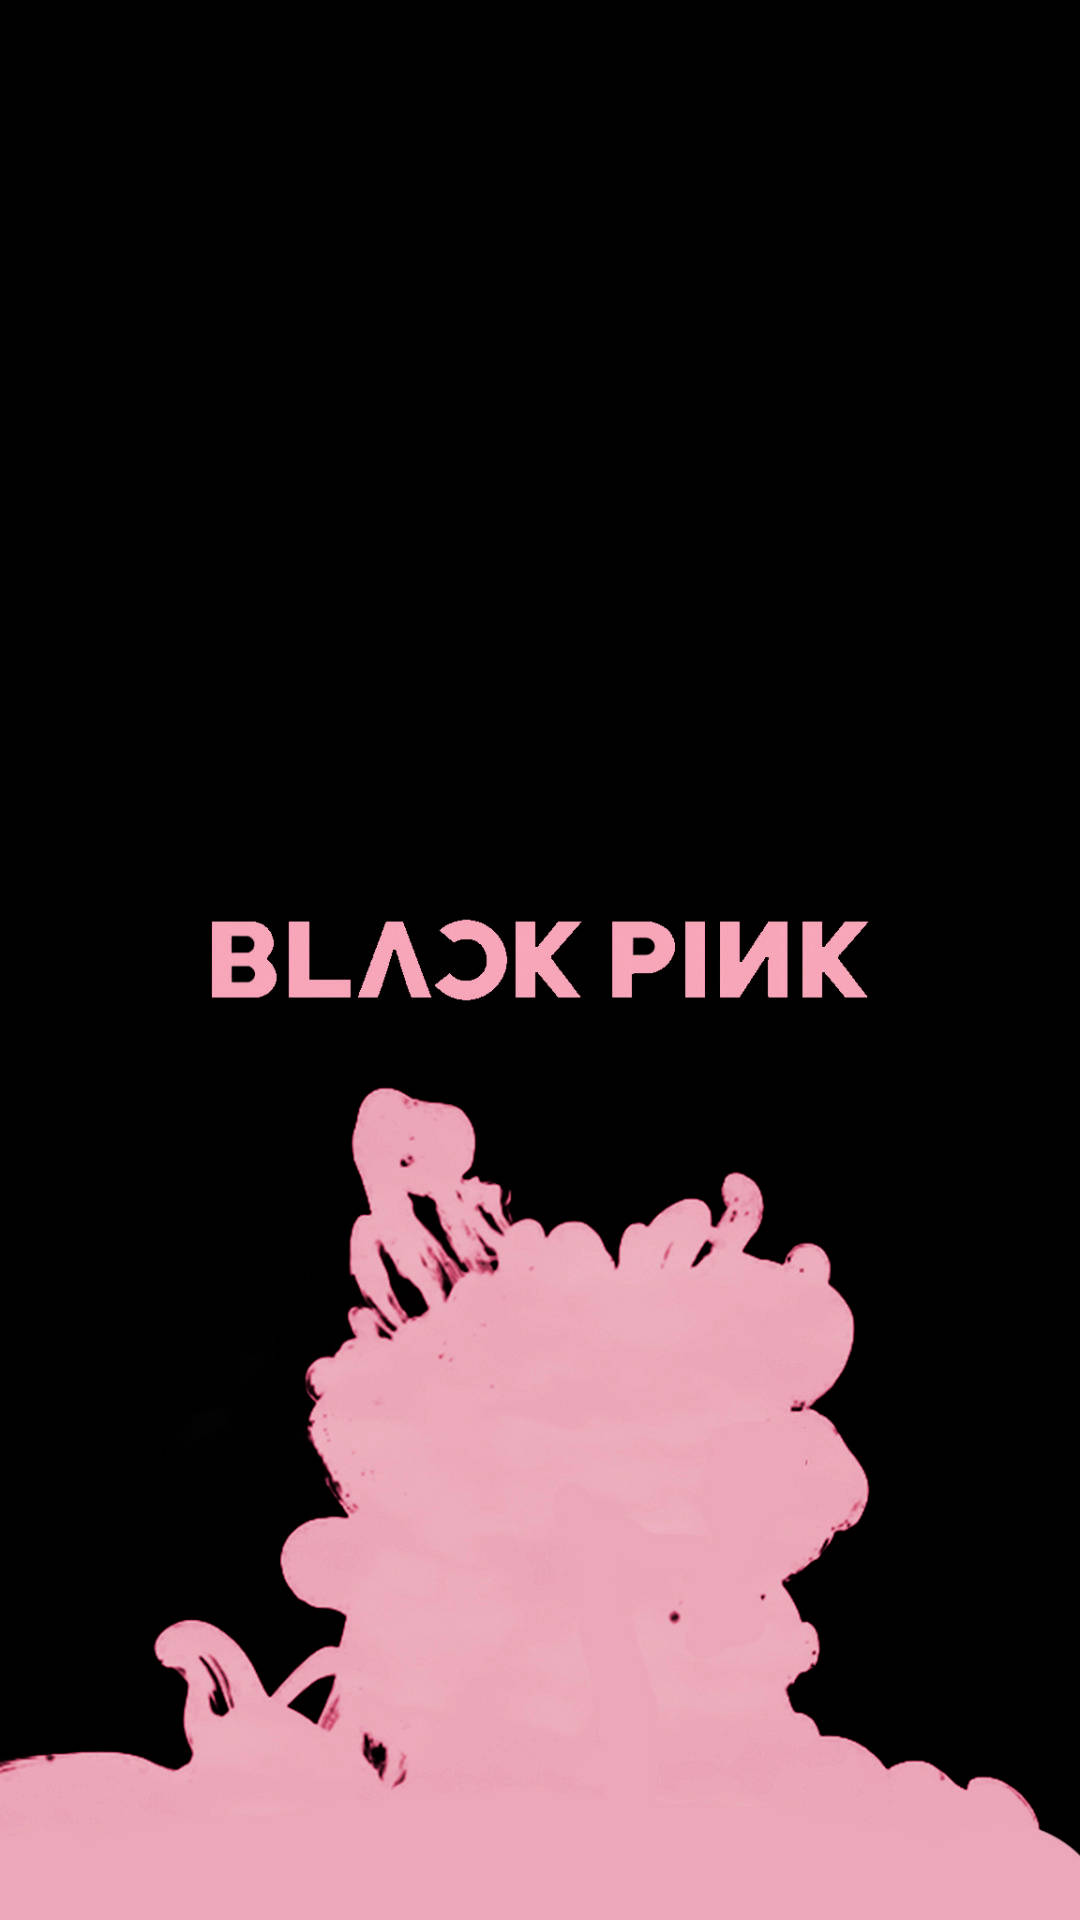 Blackpink Logo - A Modern Symbol of Fierceness and Female Empowerment Wallpaper